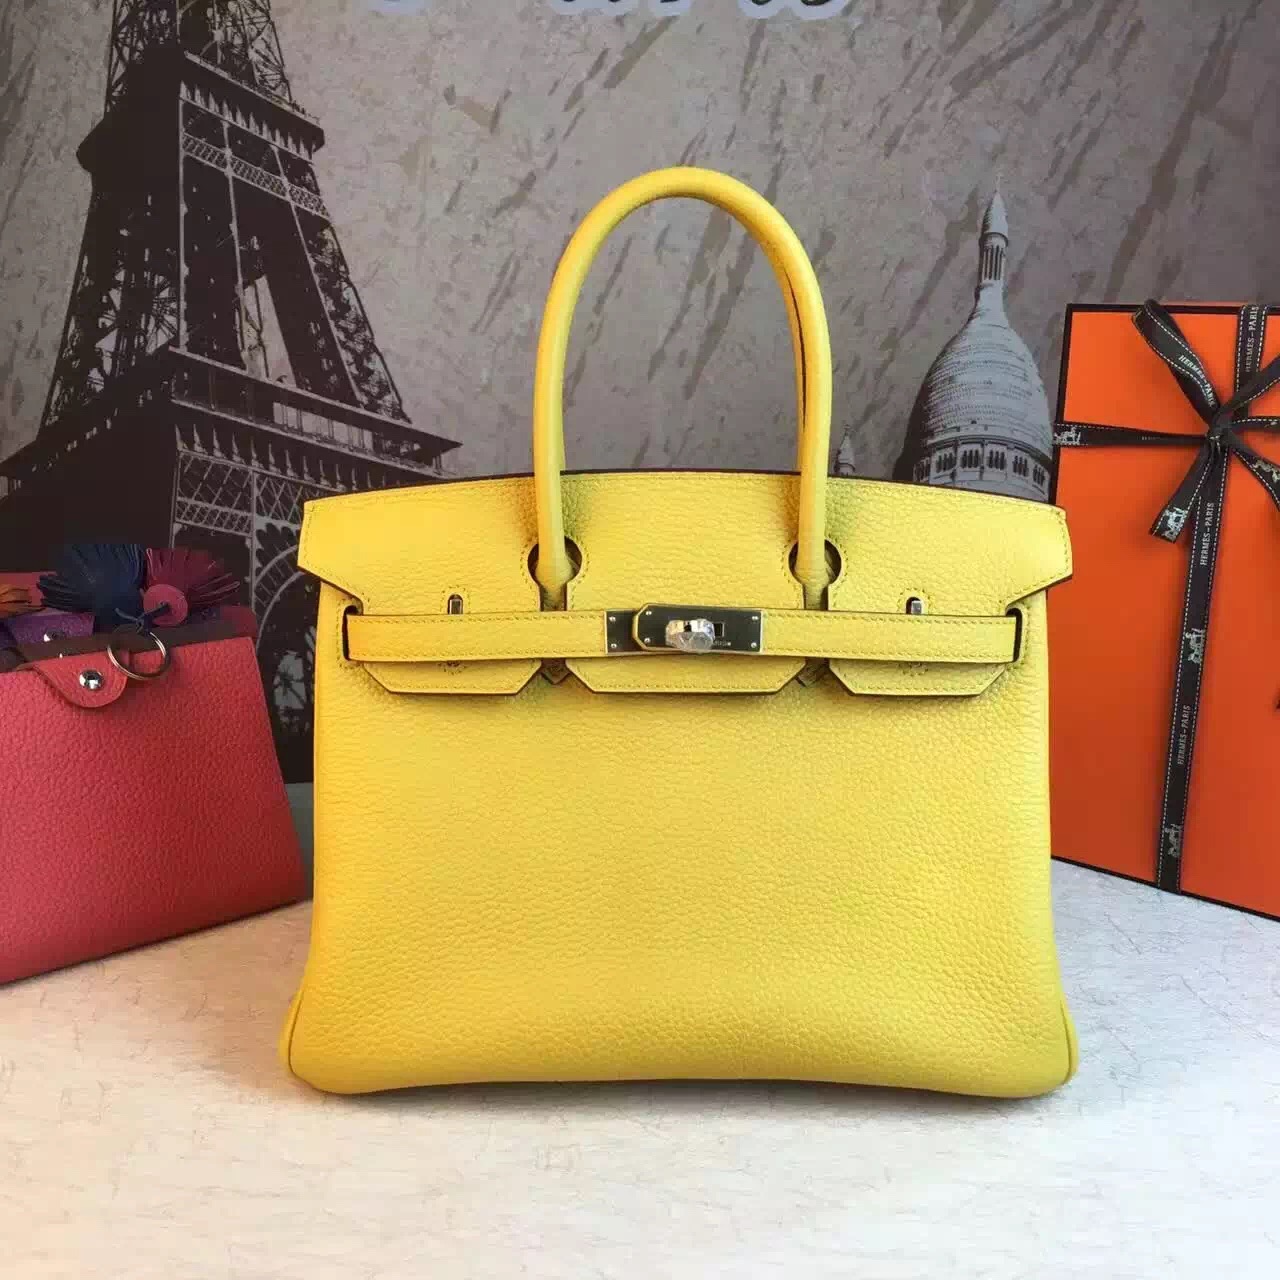 Hermes top leather yellow Birkin handbags